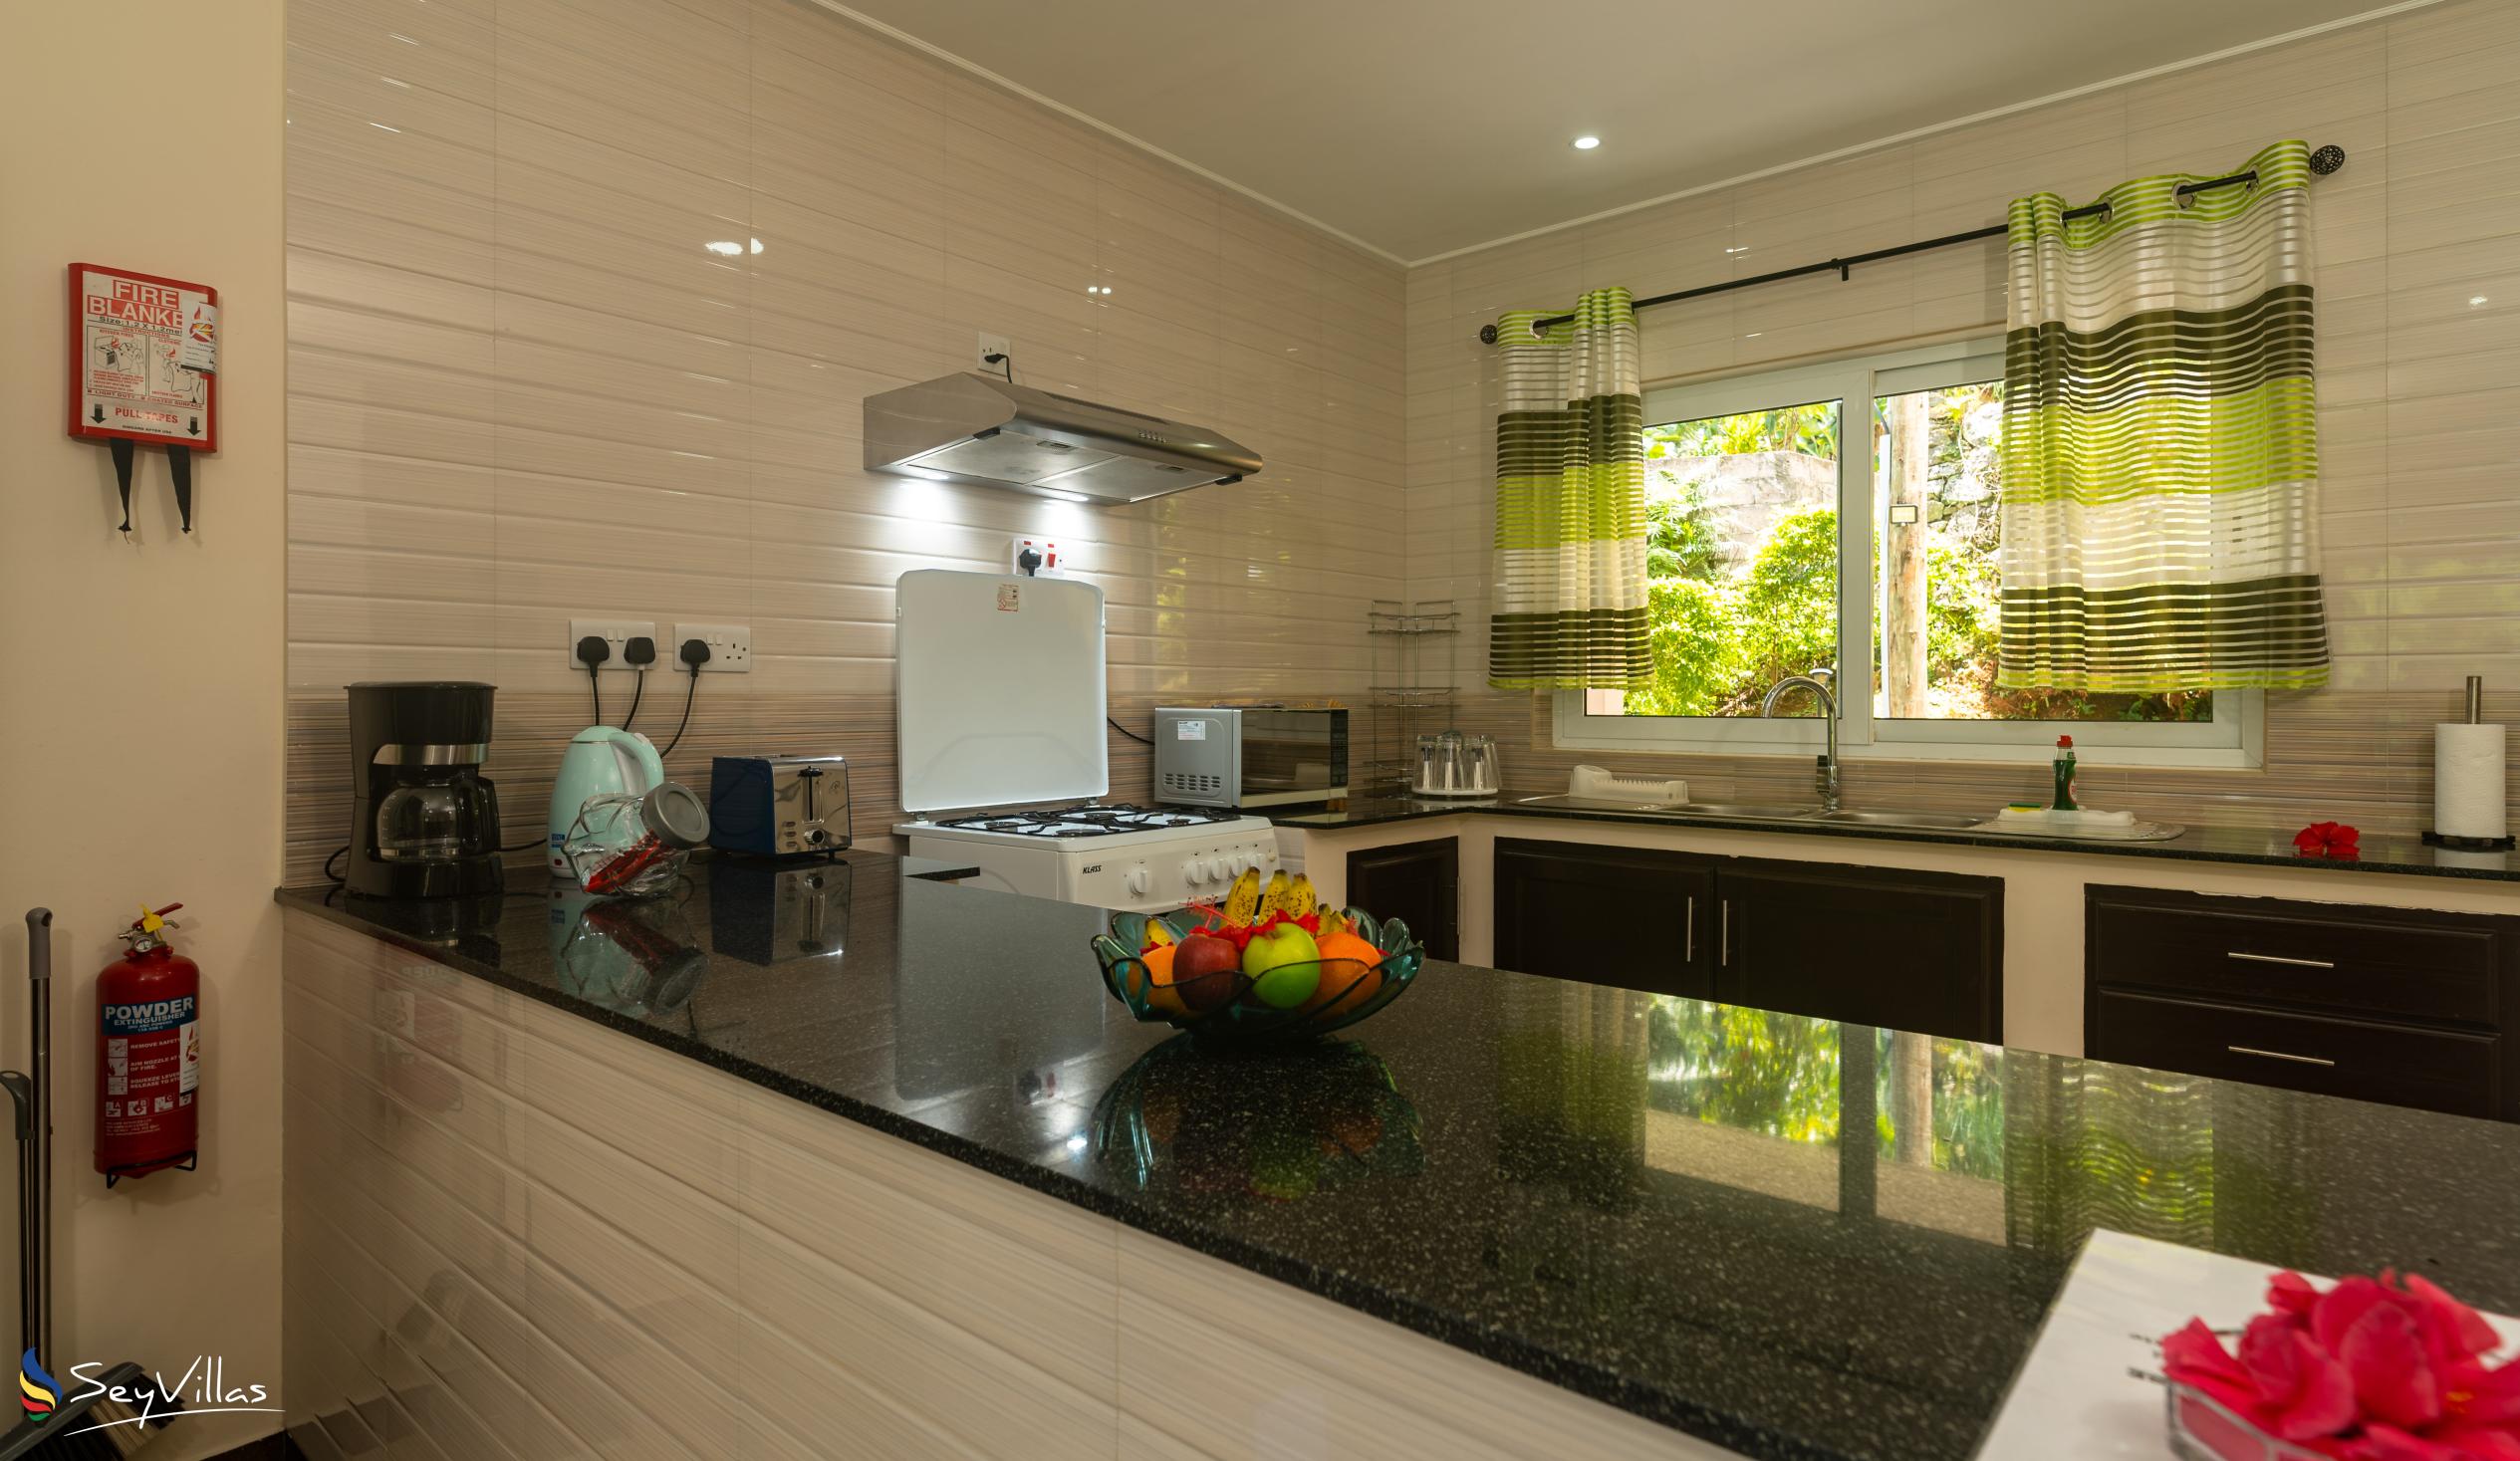 Foto 45: JAIDSS Holiday Apartments - Appartamento con 2 camere - Mahé (Seychelles)